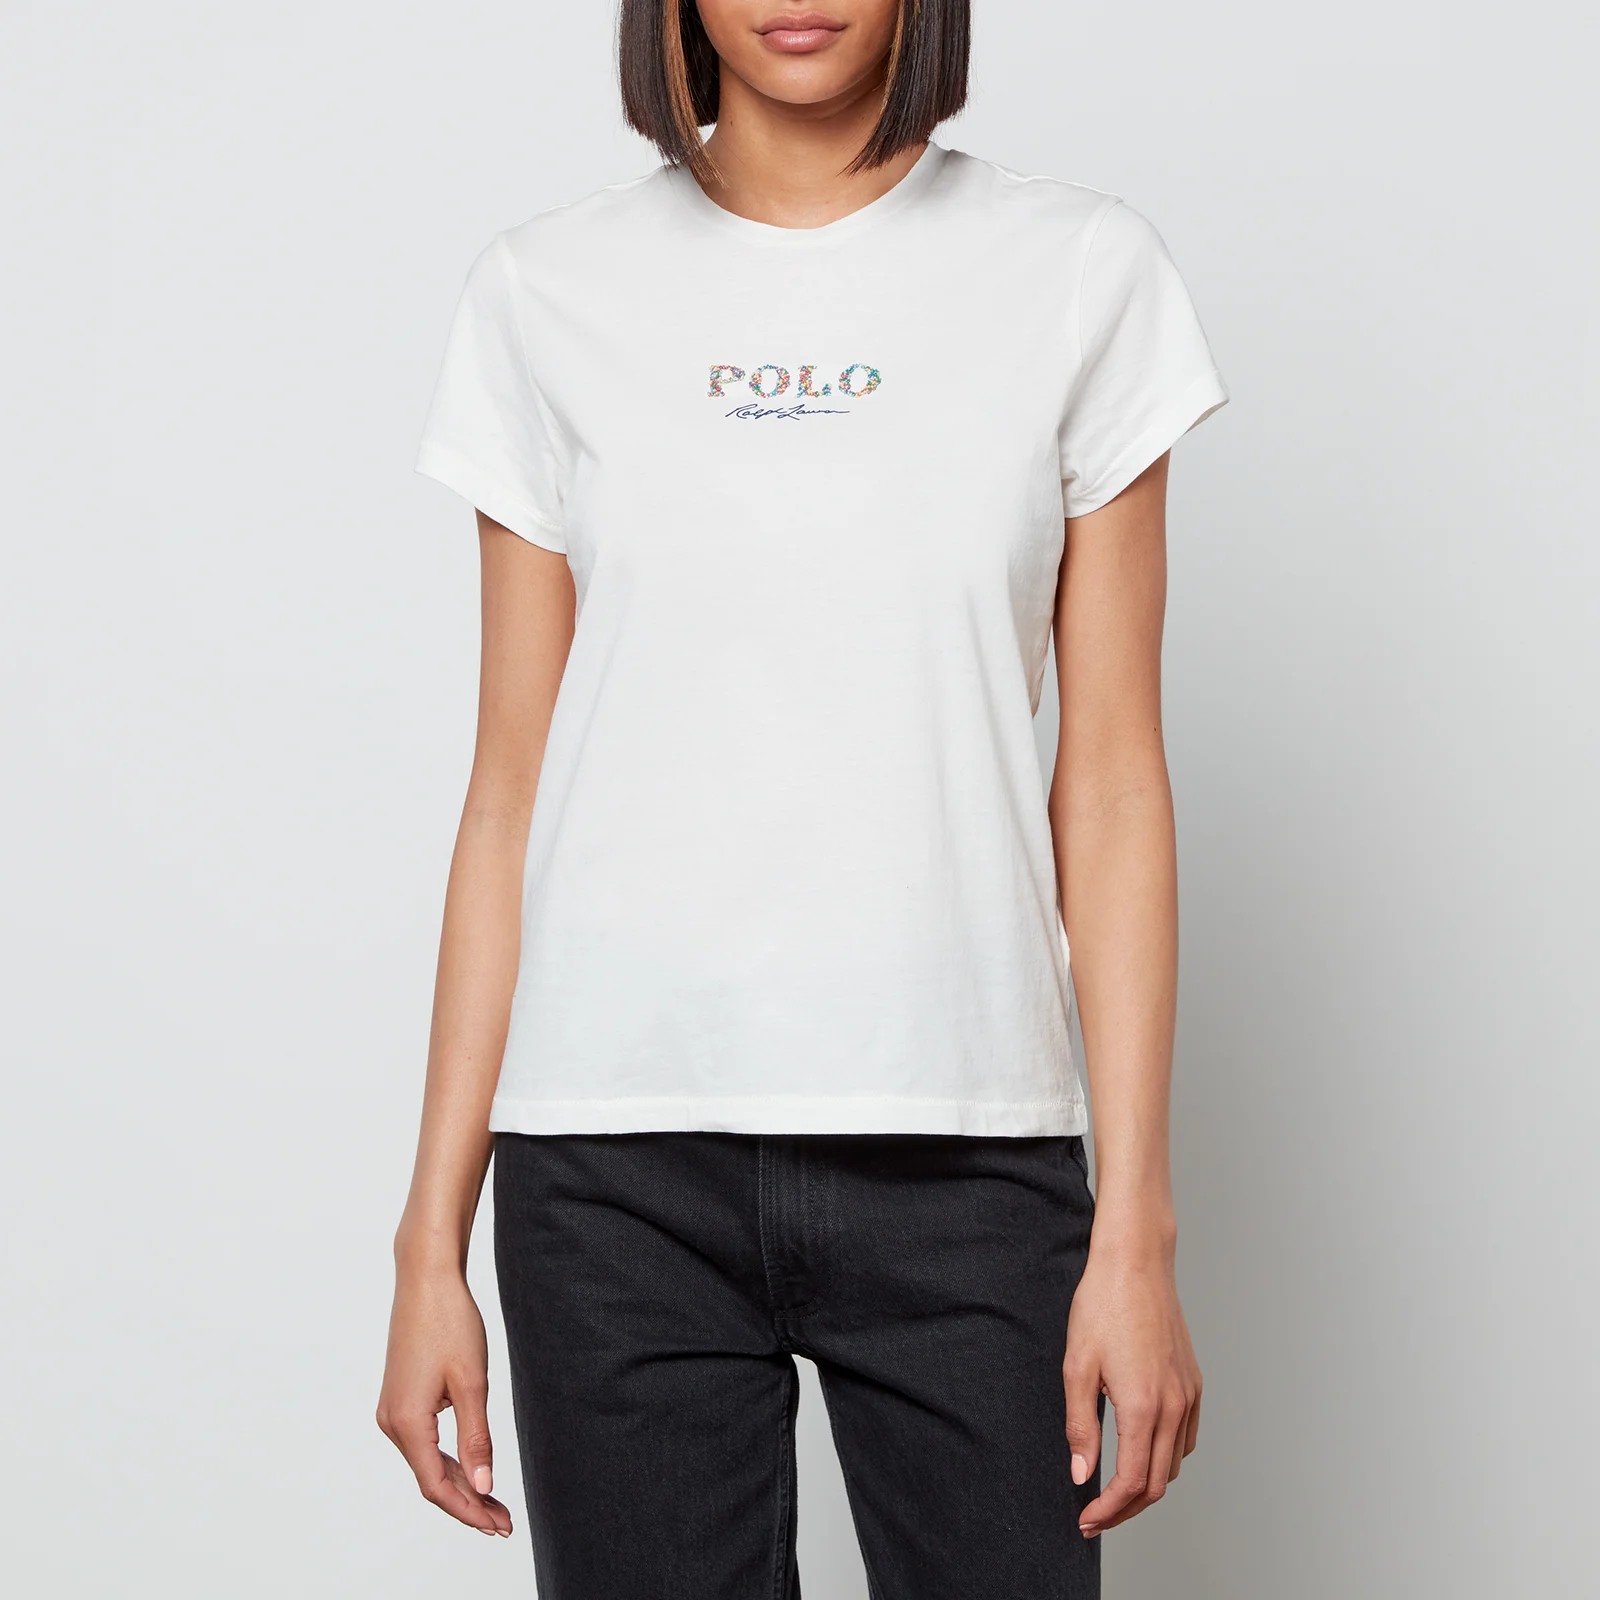 Polo Ralph Lauren Women's Polo Logo T-Shirt - Deckwash White Image 1